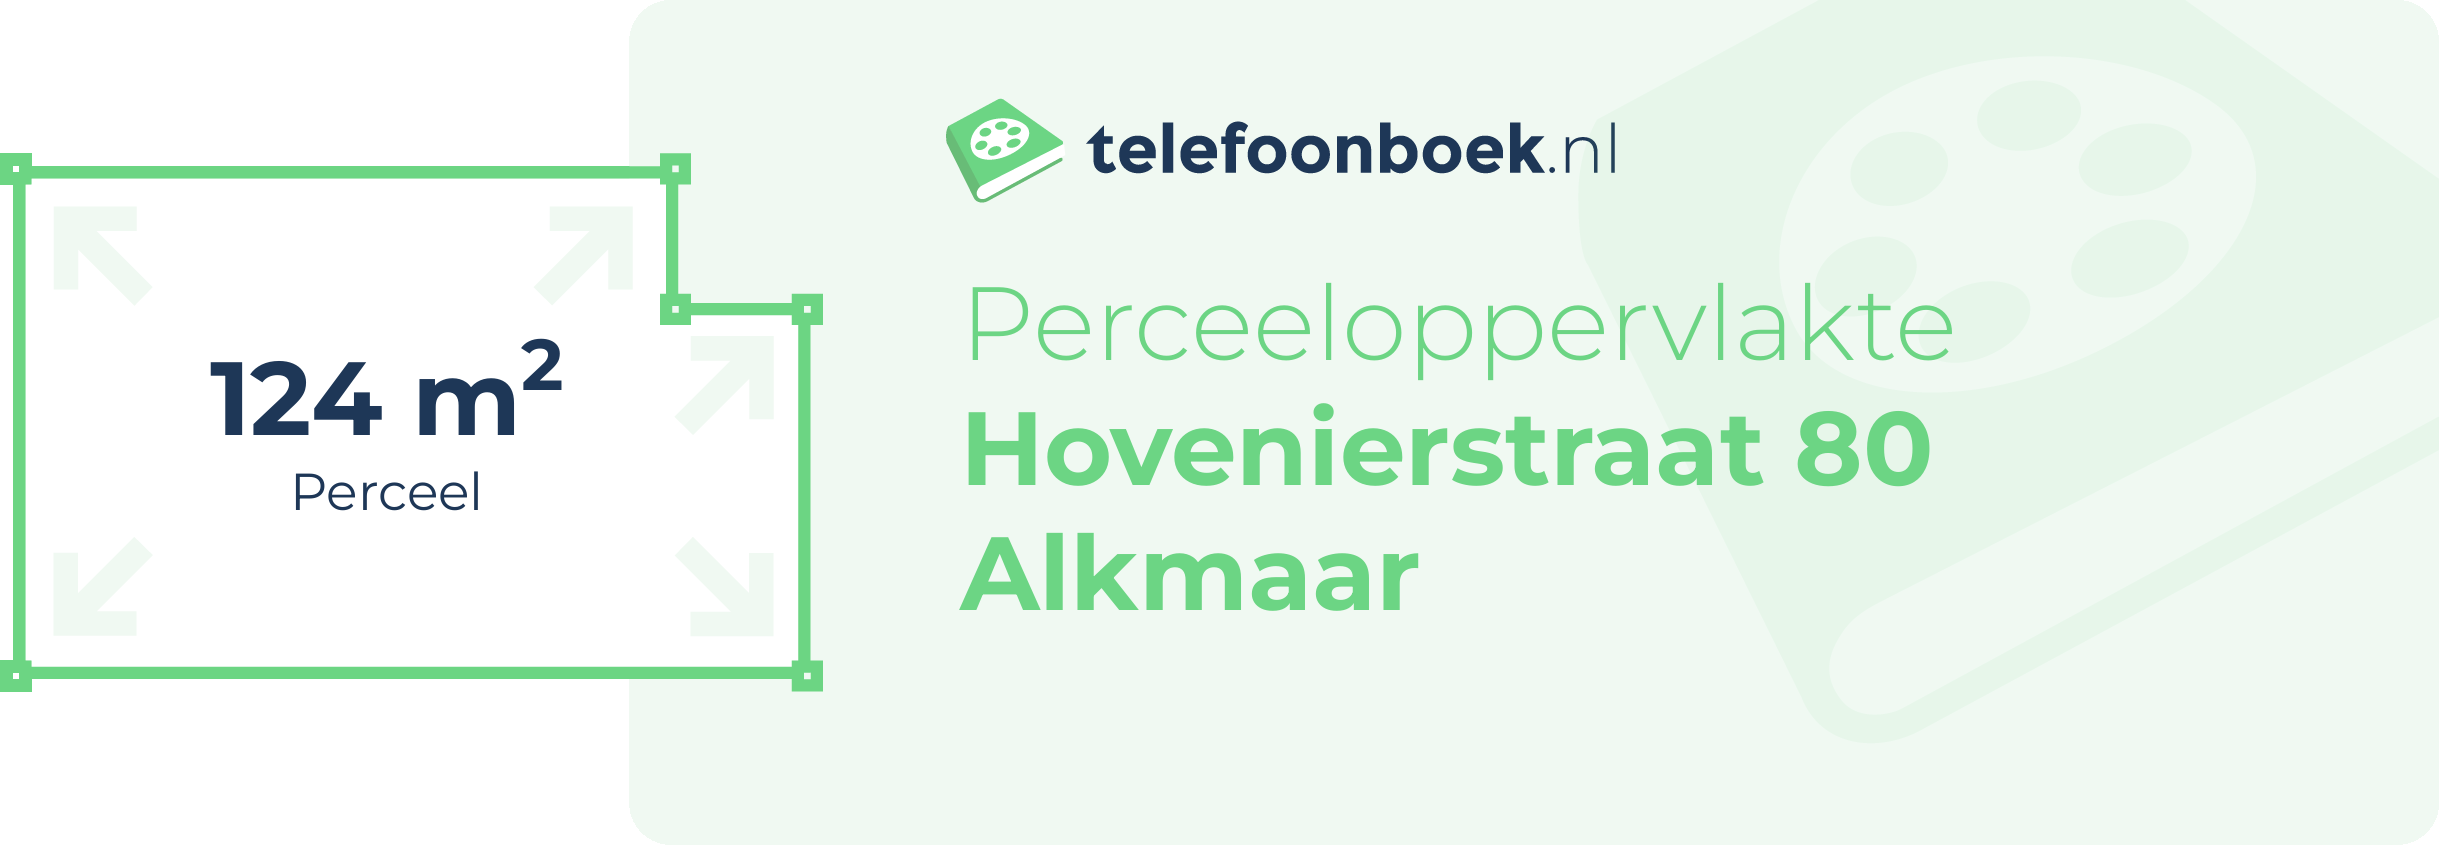 Perceeloppervlakte Hovenierstraat 80 Alkmaar